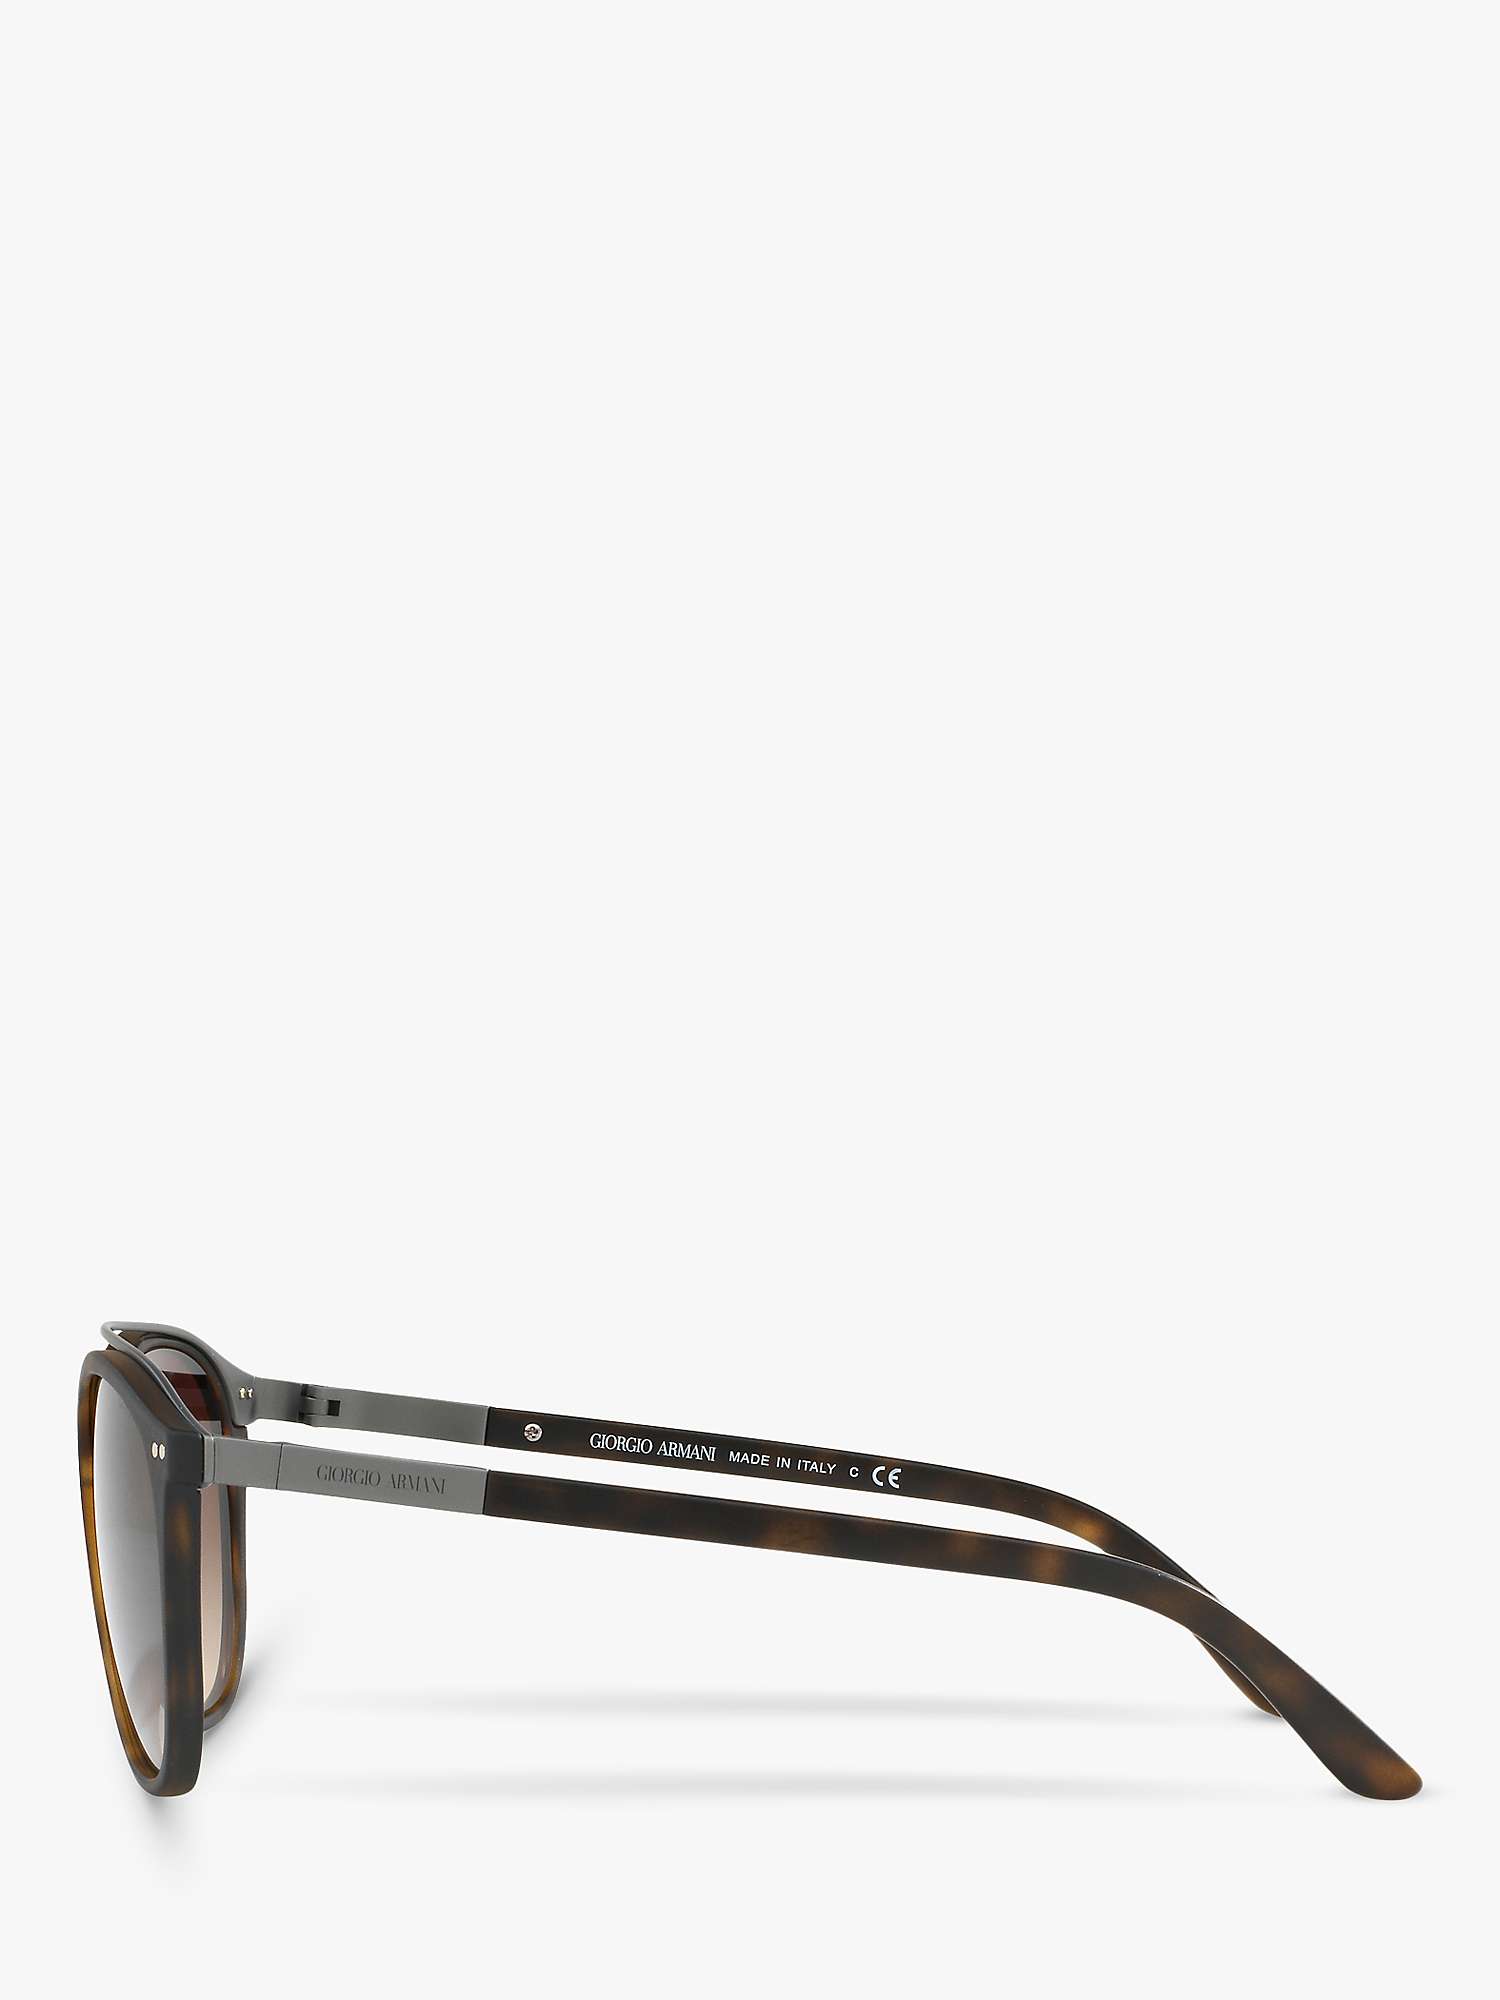 Buy Giorgio Armani AR8088 Women's Oval Sunglasses, Tortoise/Brown Gradient Online at johnlewis.com